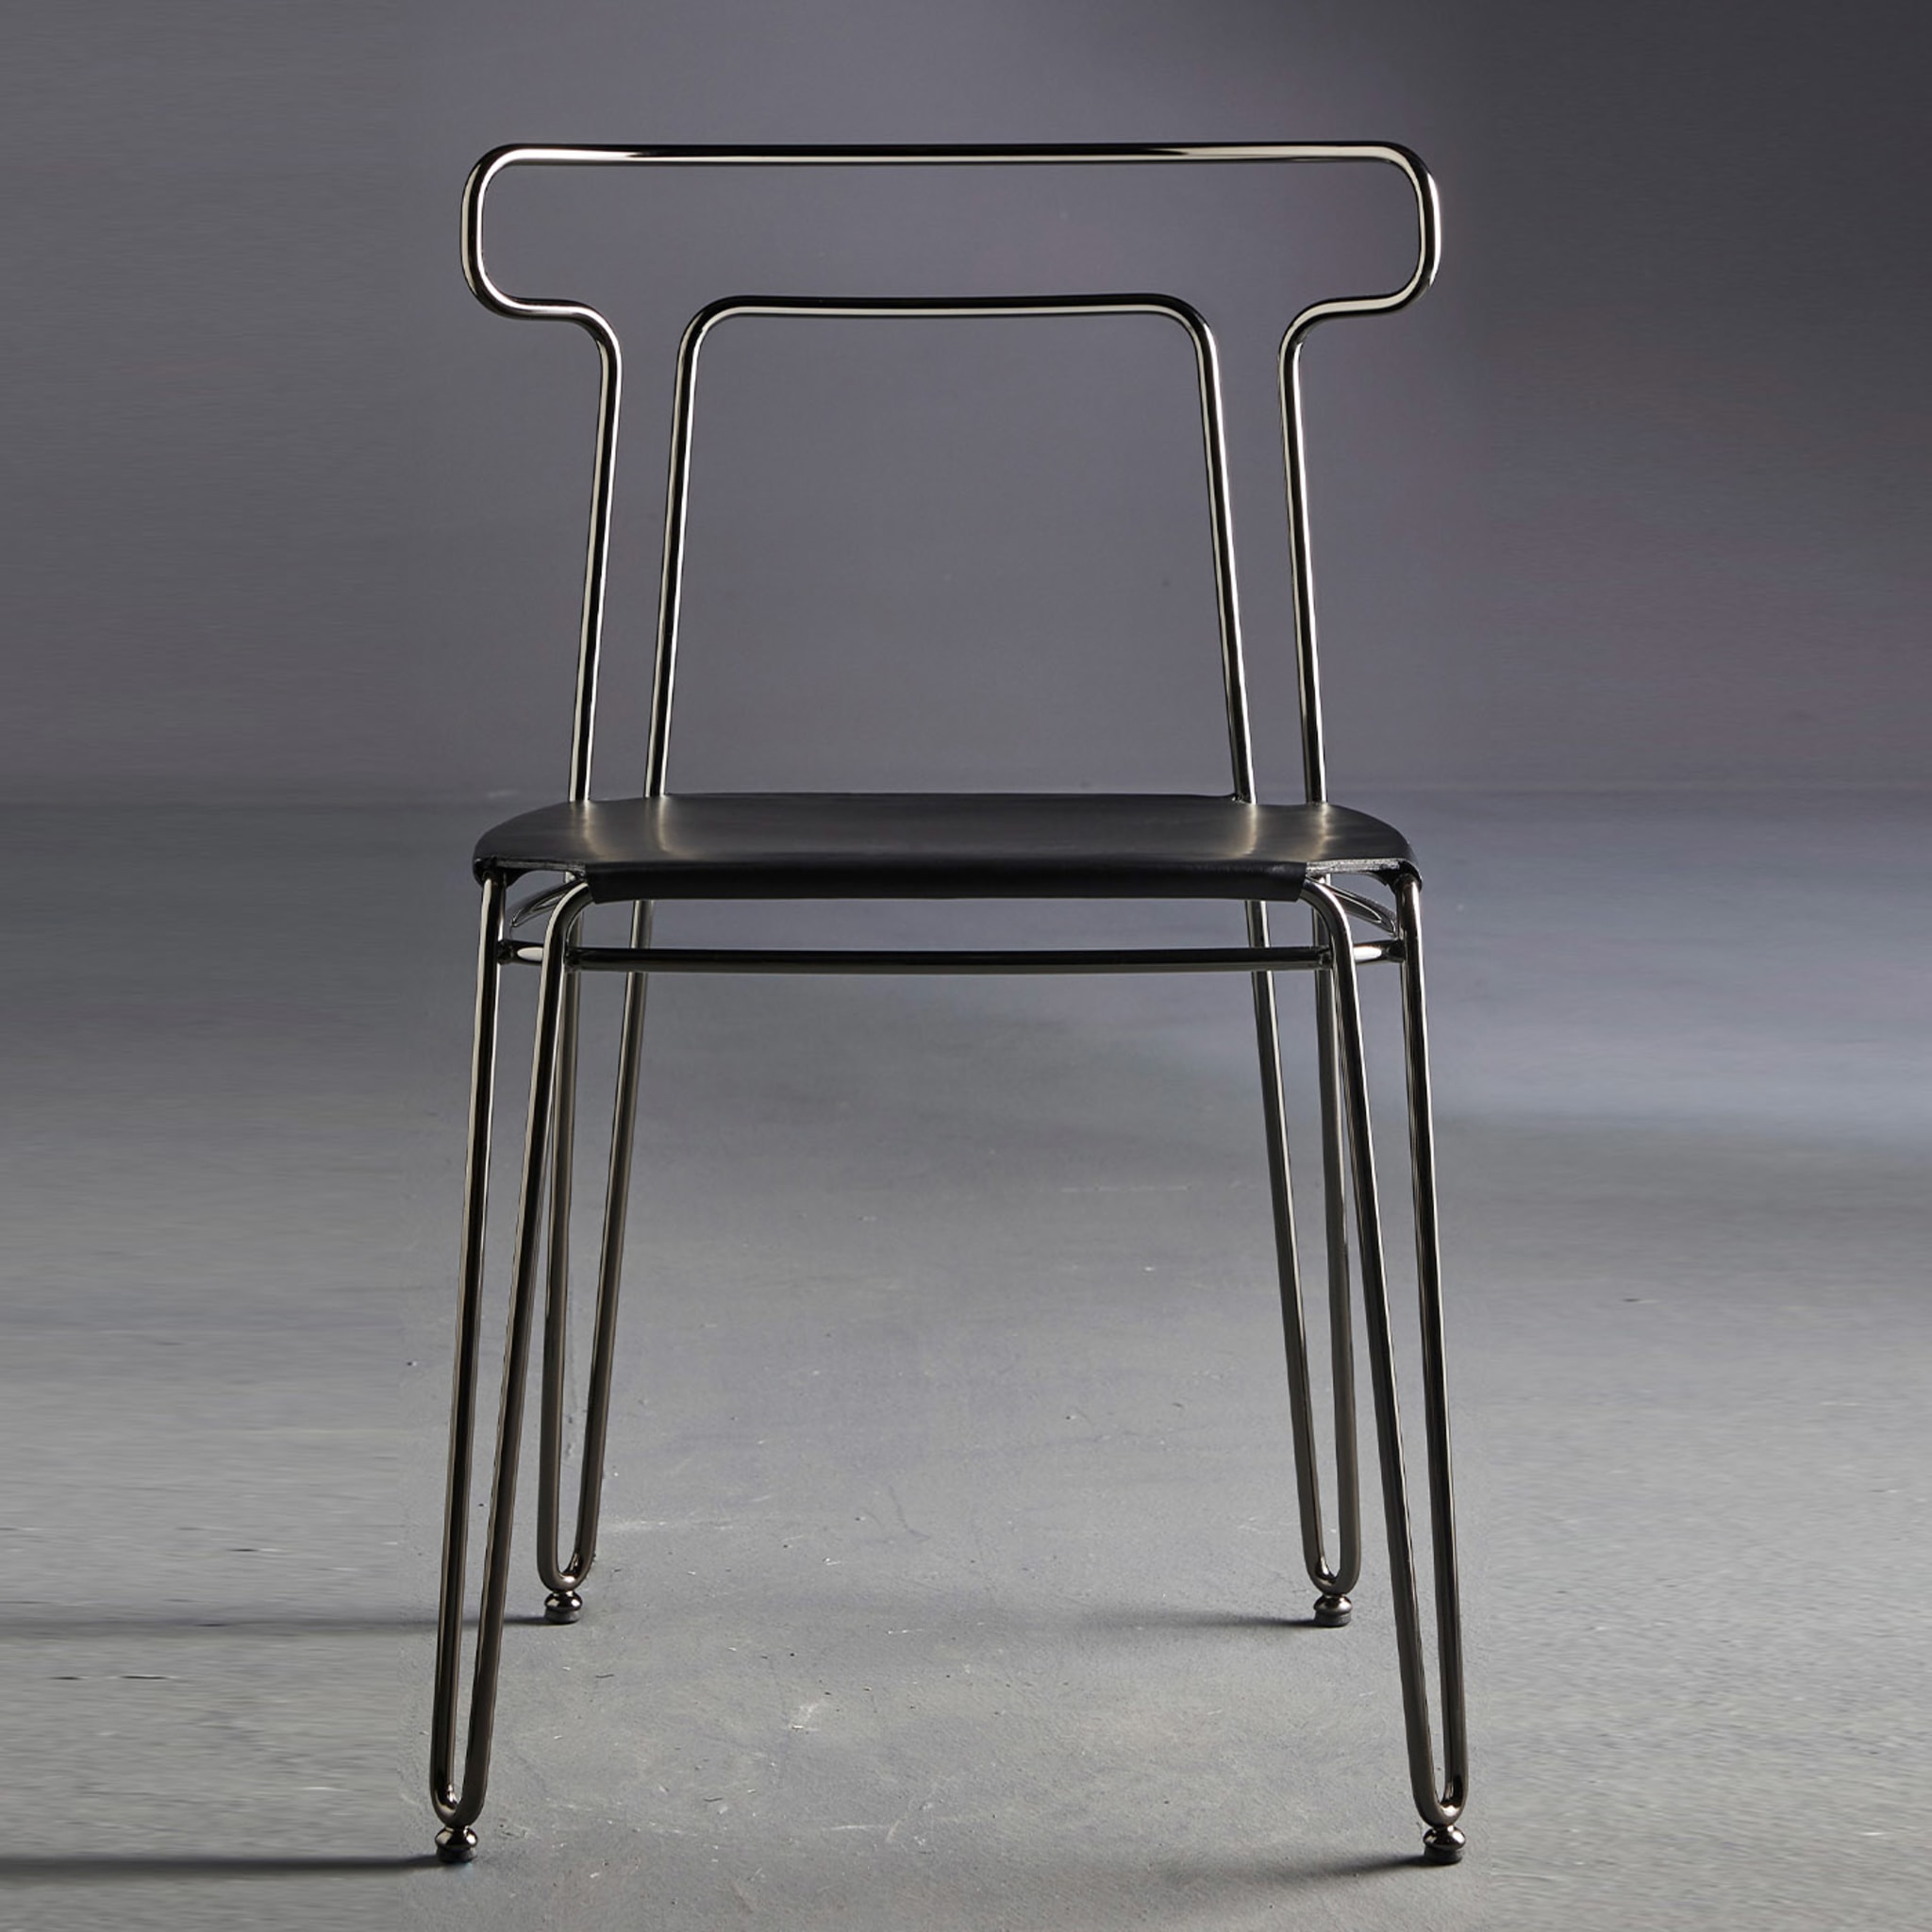 Jackie Black Chair by S. Grassi - Alternative view 2